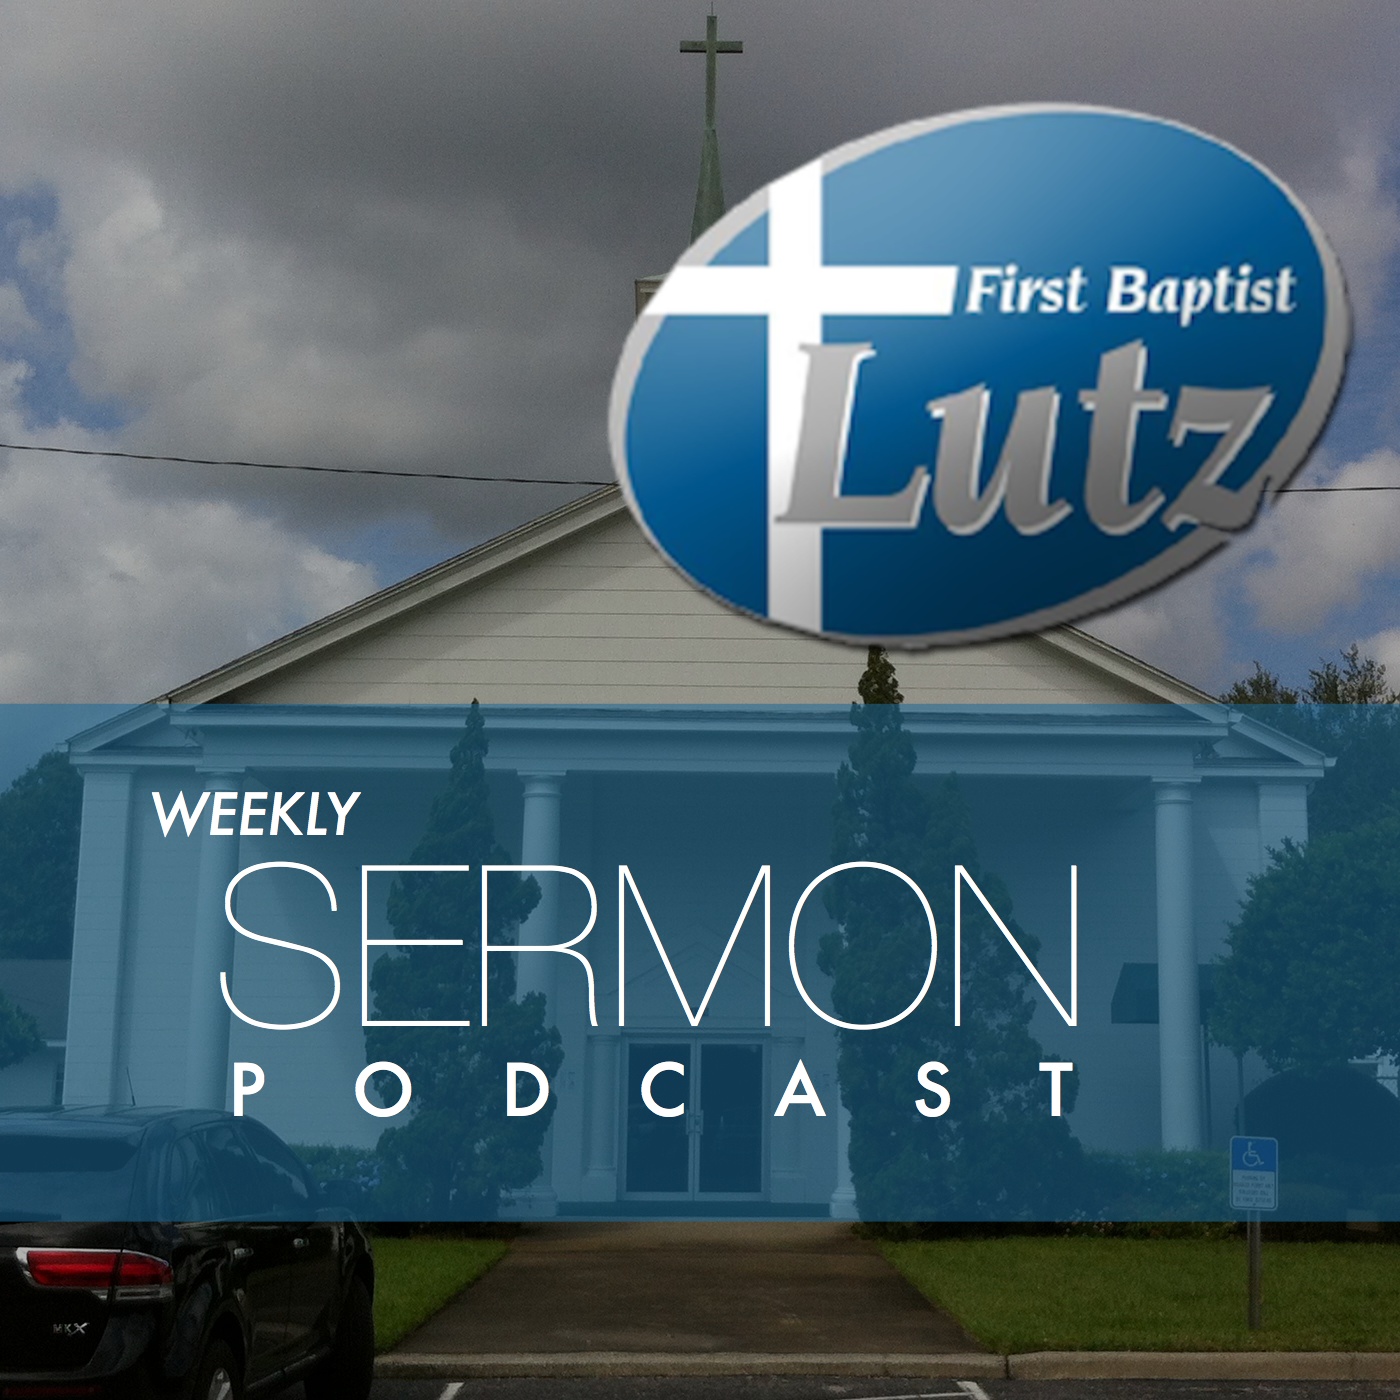 Sermon Podcast - First Baptist Church of Lutz